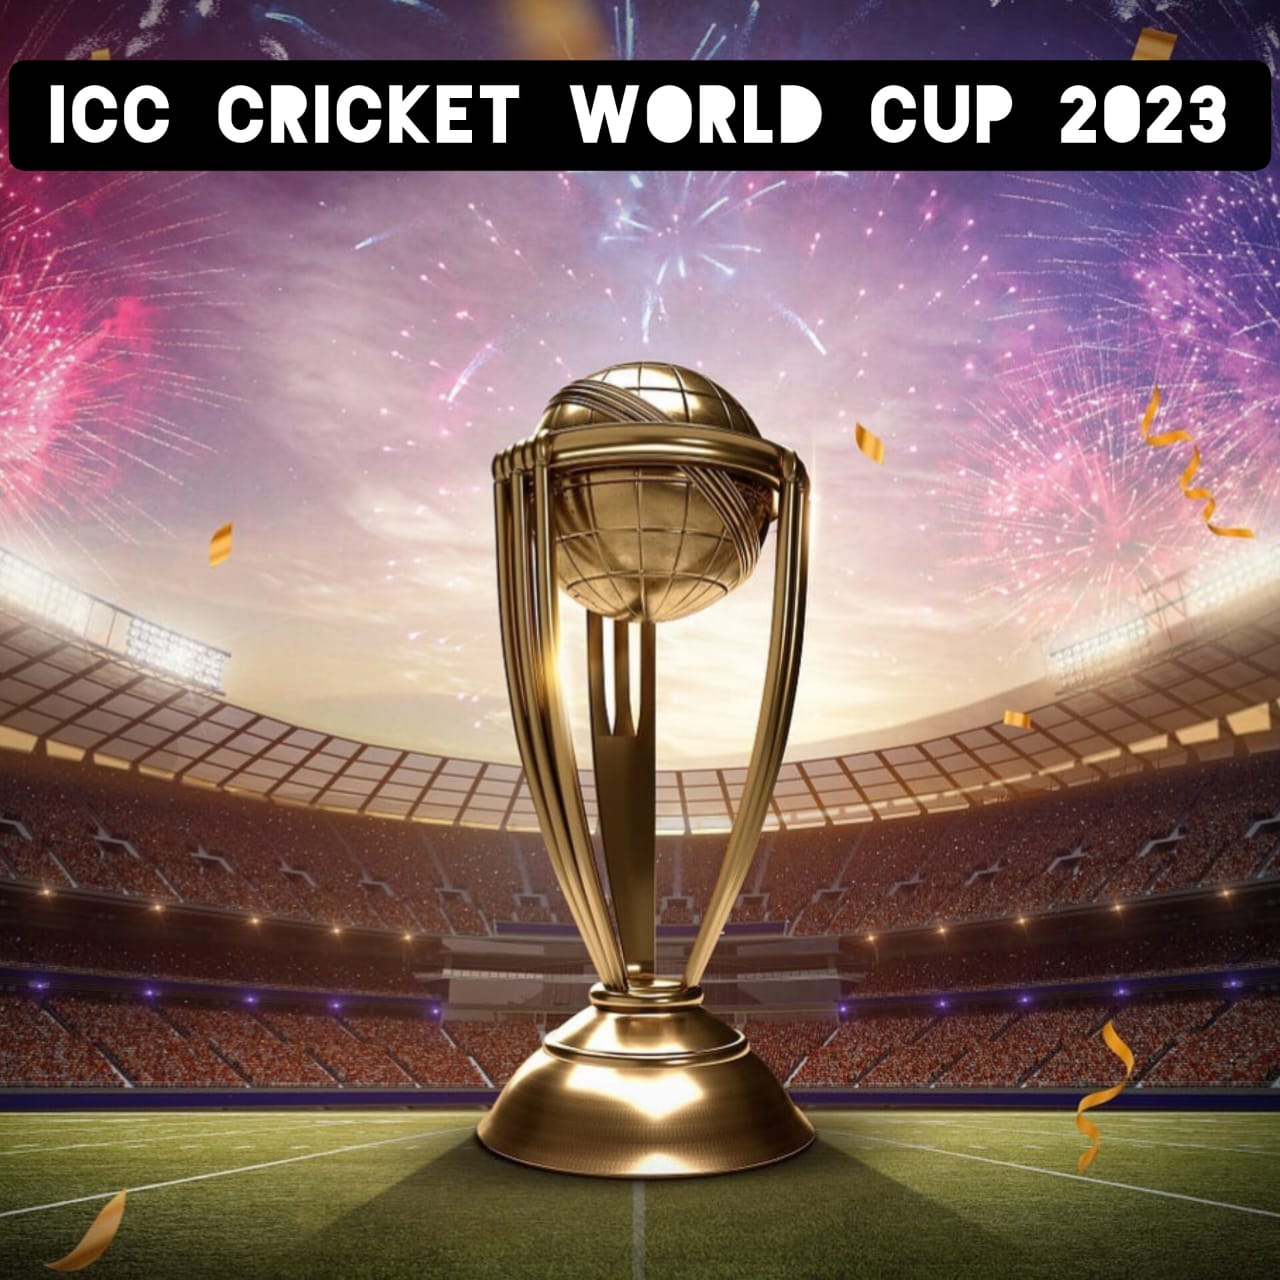 ICC CRICKET WORLD CUP 2023